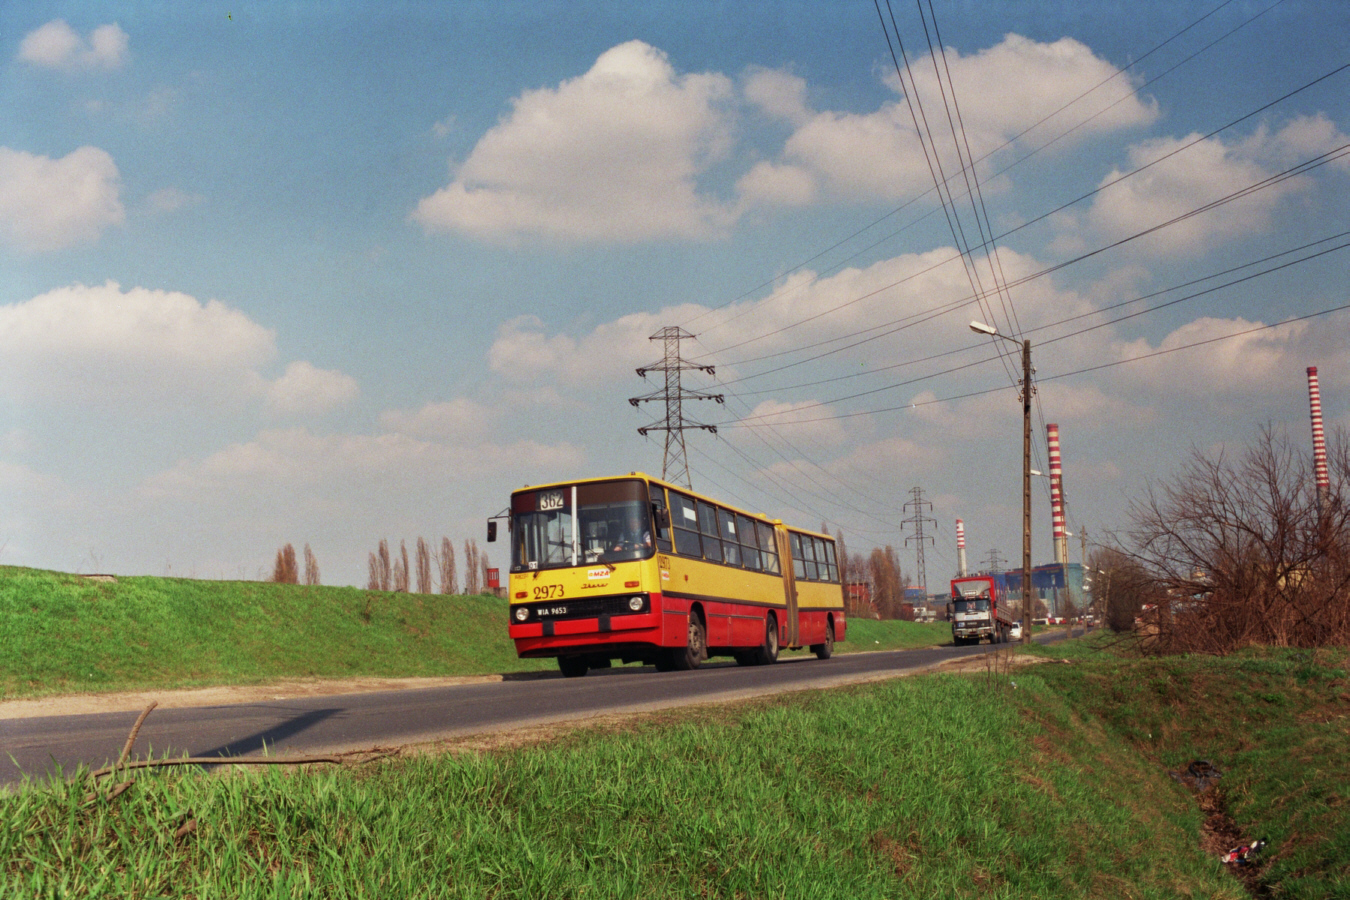 2973
Ikarus 280, produkcja 1990, NG 1998, kasacja 2007.

Foto: P.B. Jezierski
